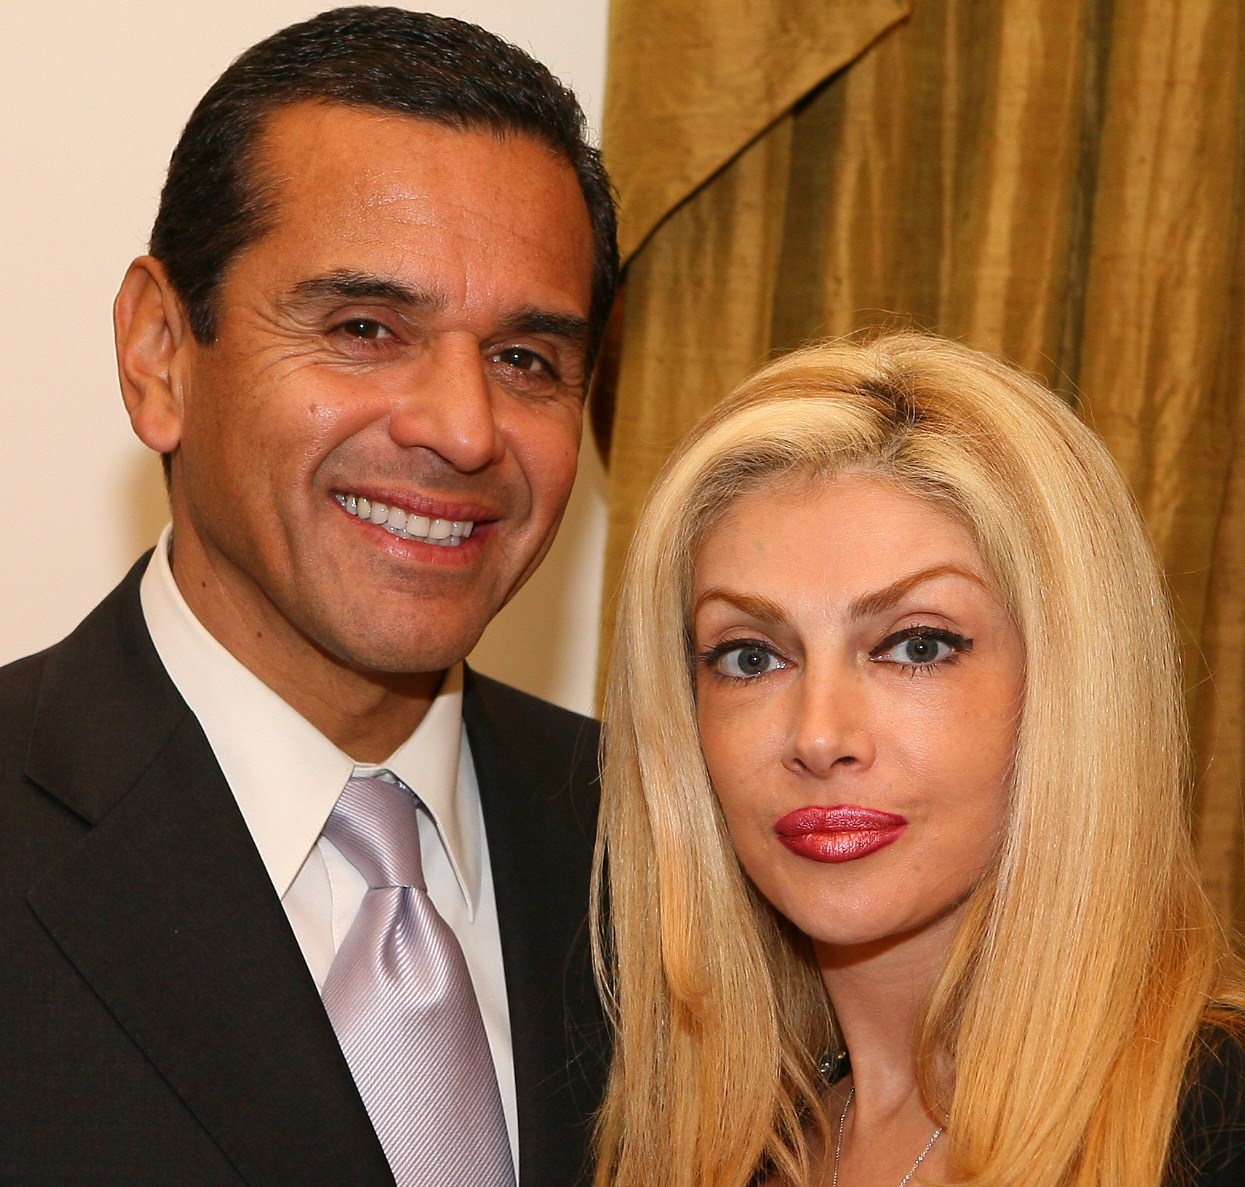 Antonio Villaraigosa; Mayor of Los Angeles, California with Anita khalatbari